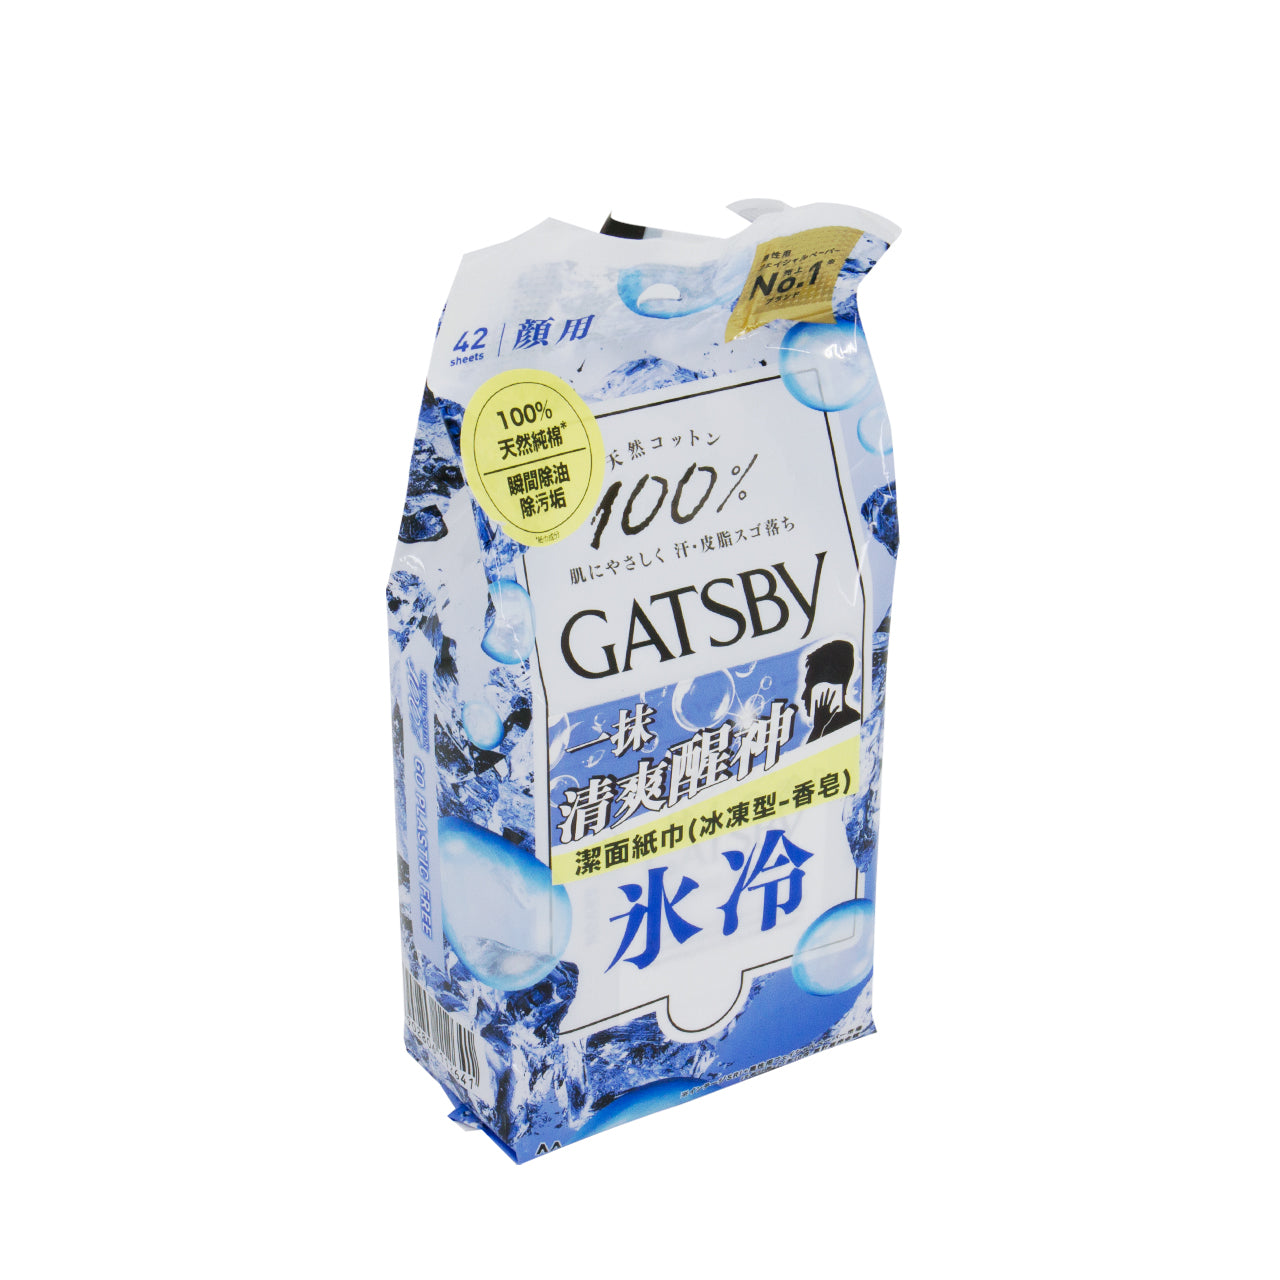 Gatsby Facial Paper Ice-Type Box Savon Scent 42PCS